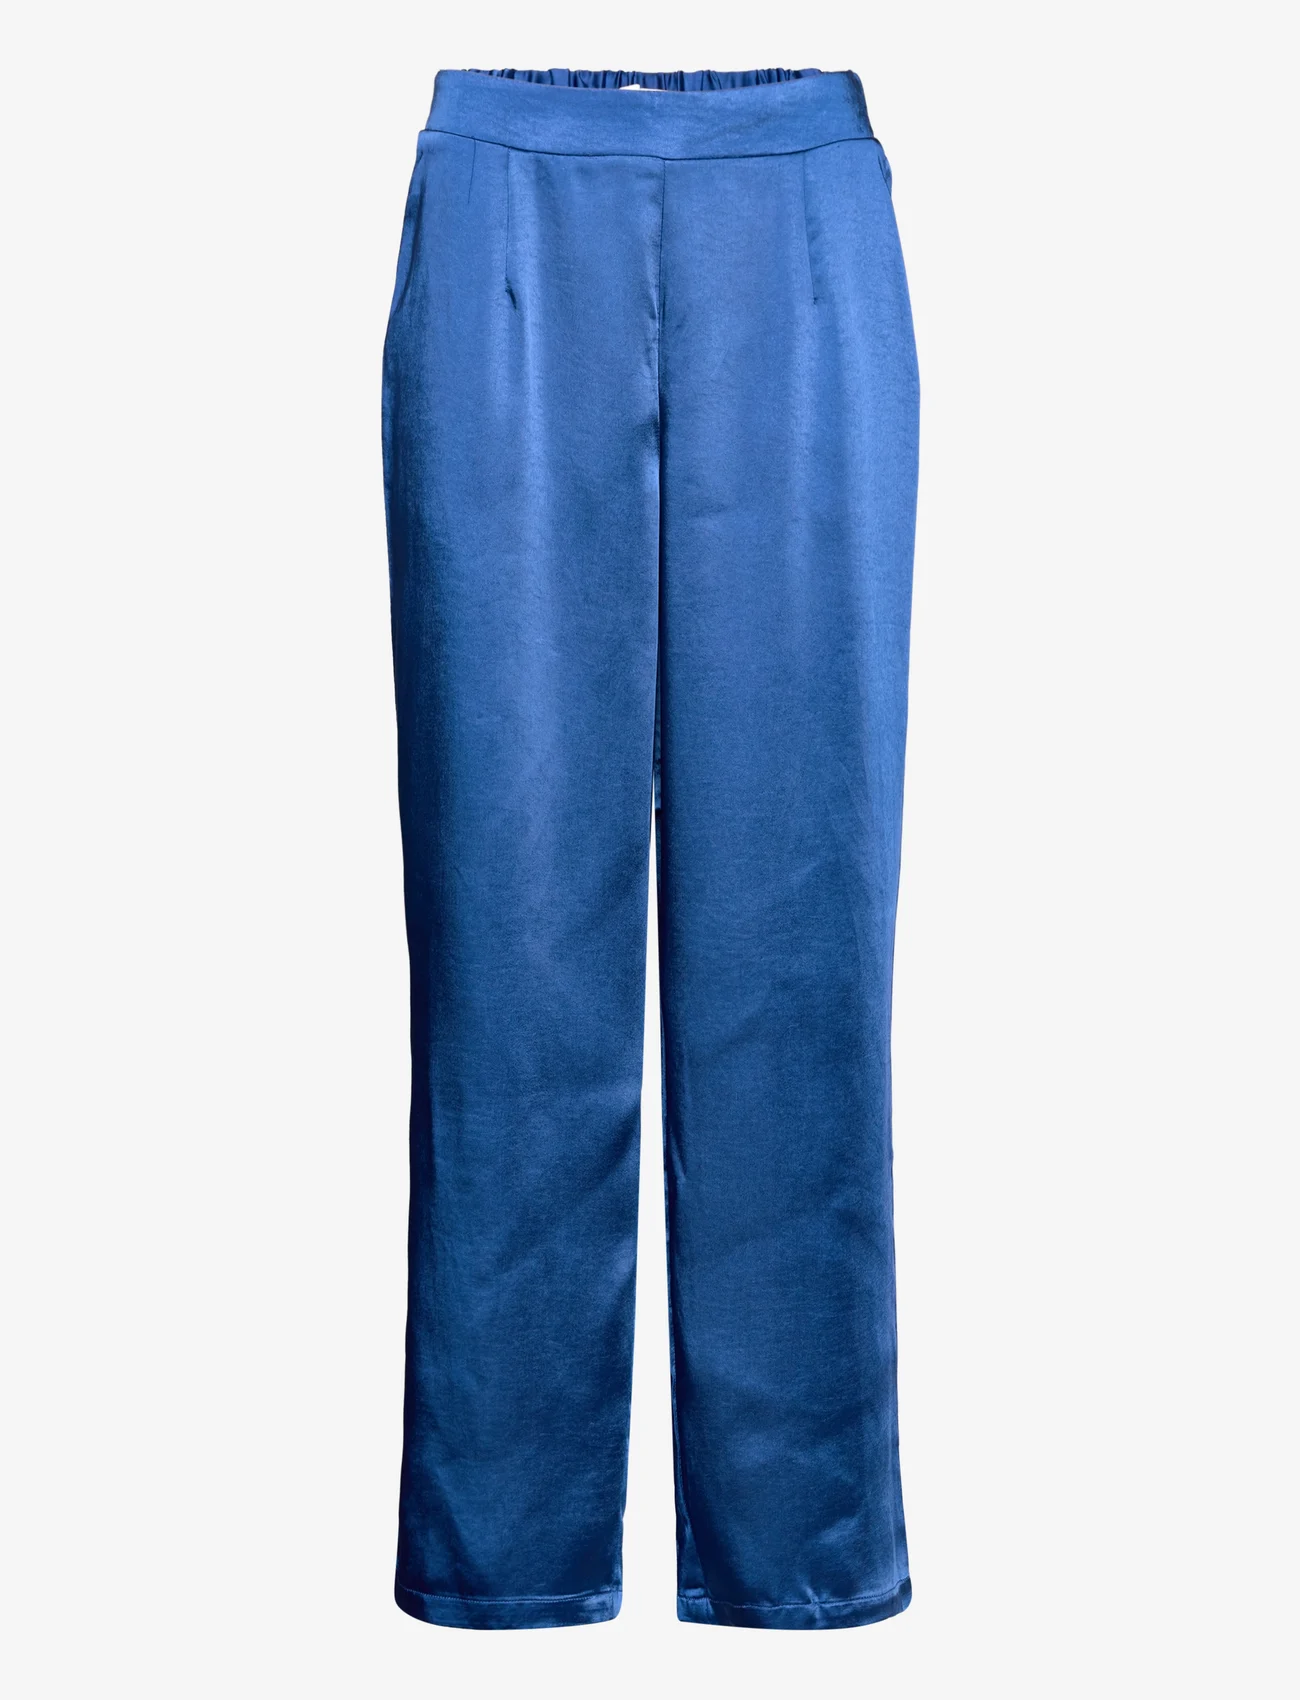 Lollys Laundry - Henry Pants - hosen mit weitem bein - neon blue - 0